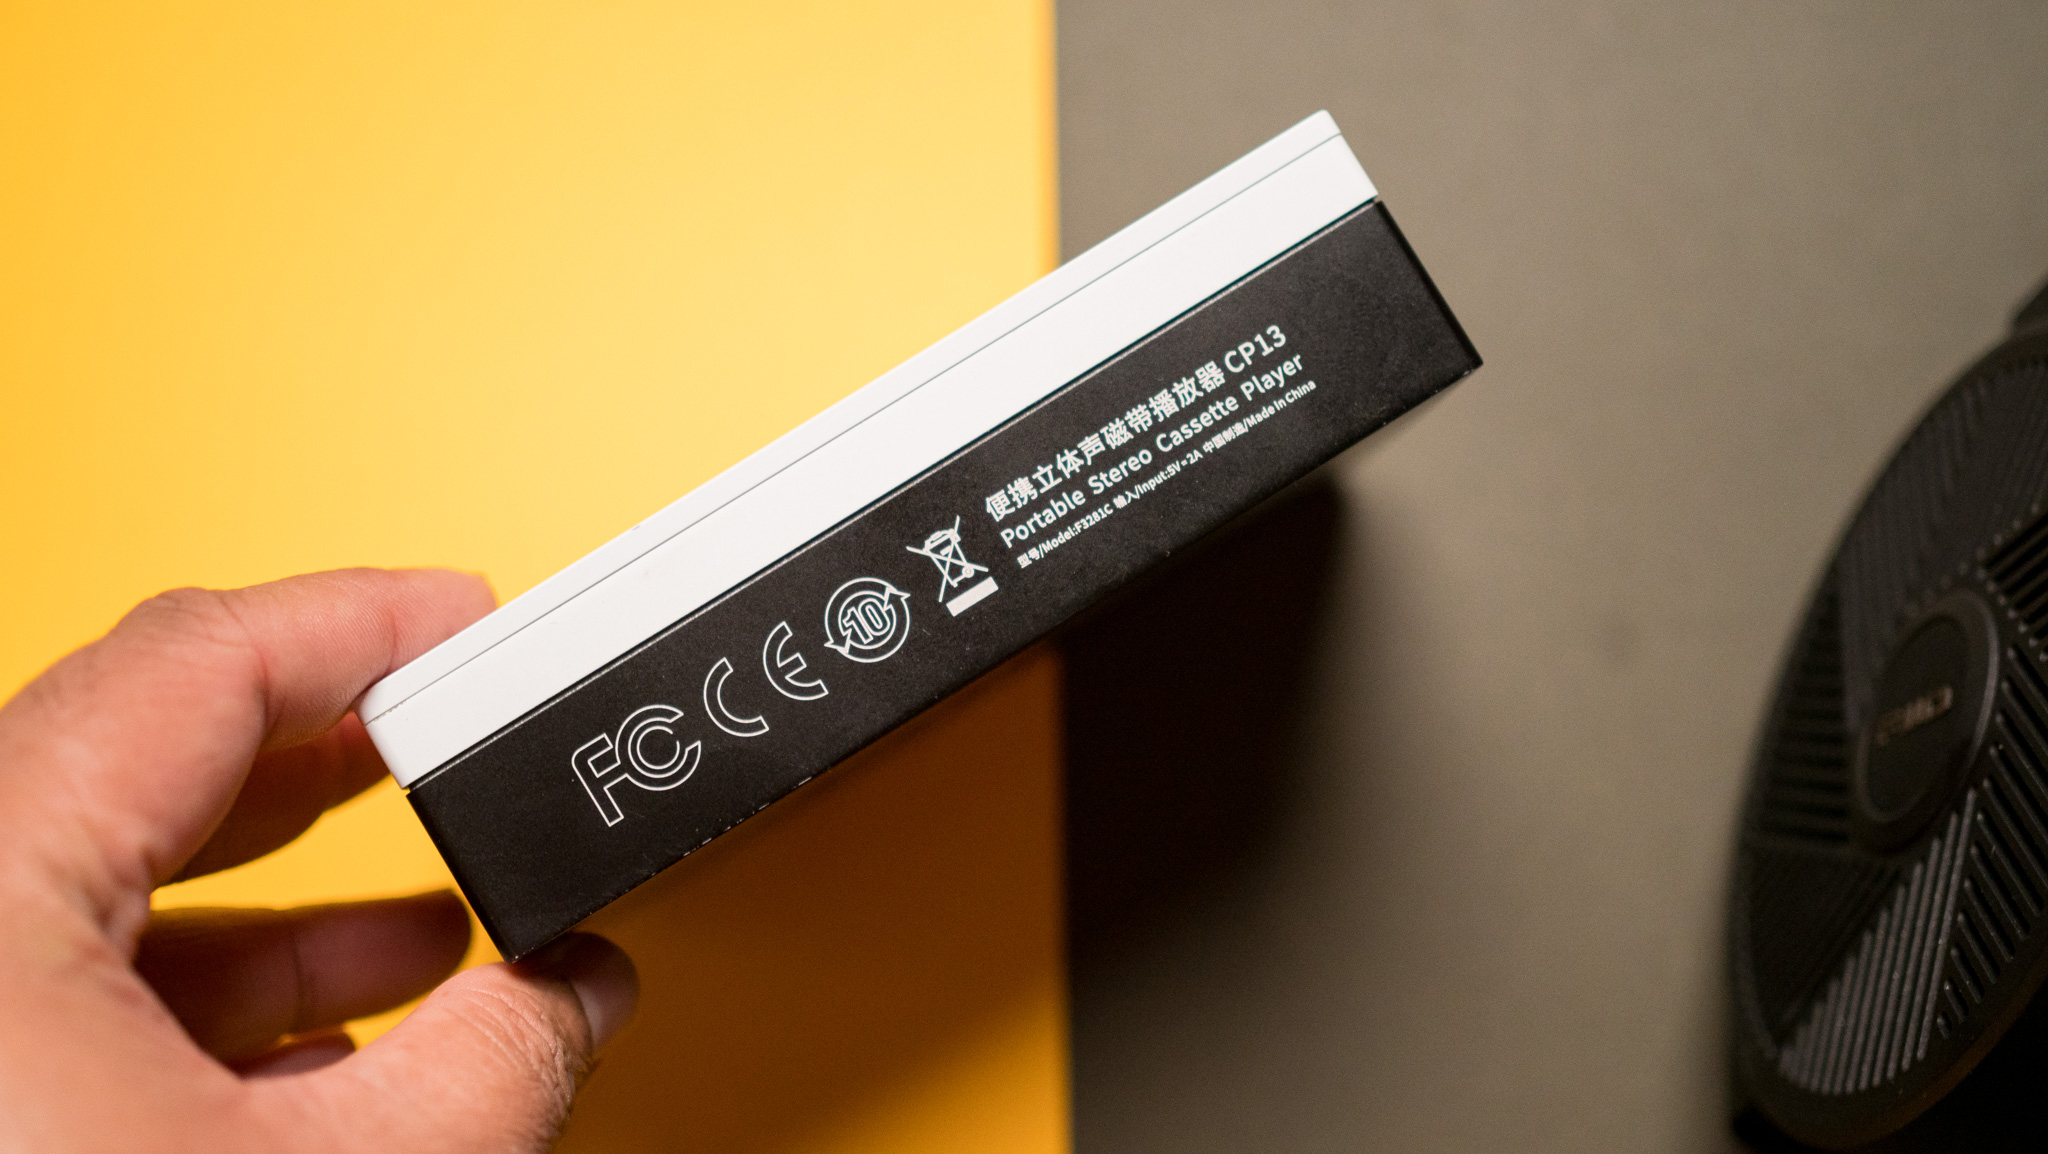 Fiio CP13 cassette player's labels